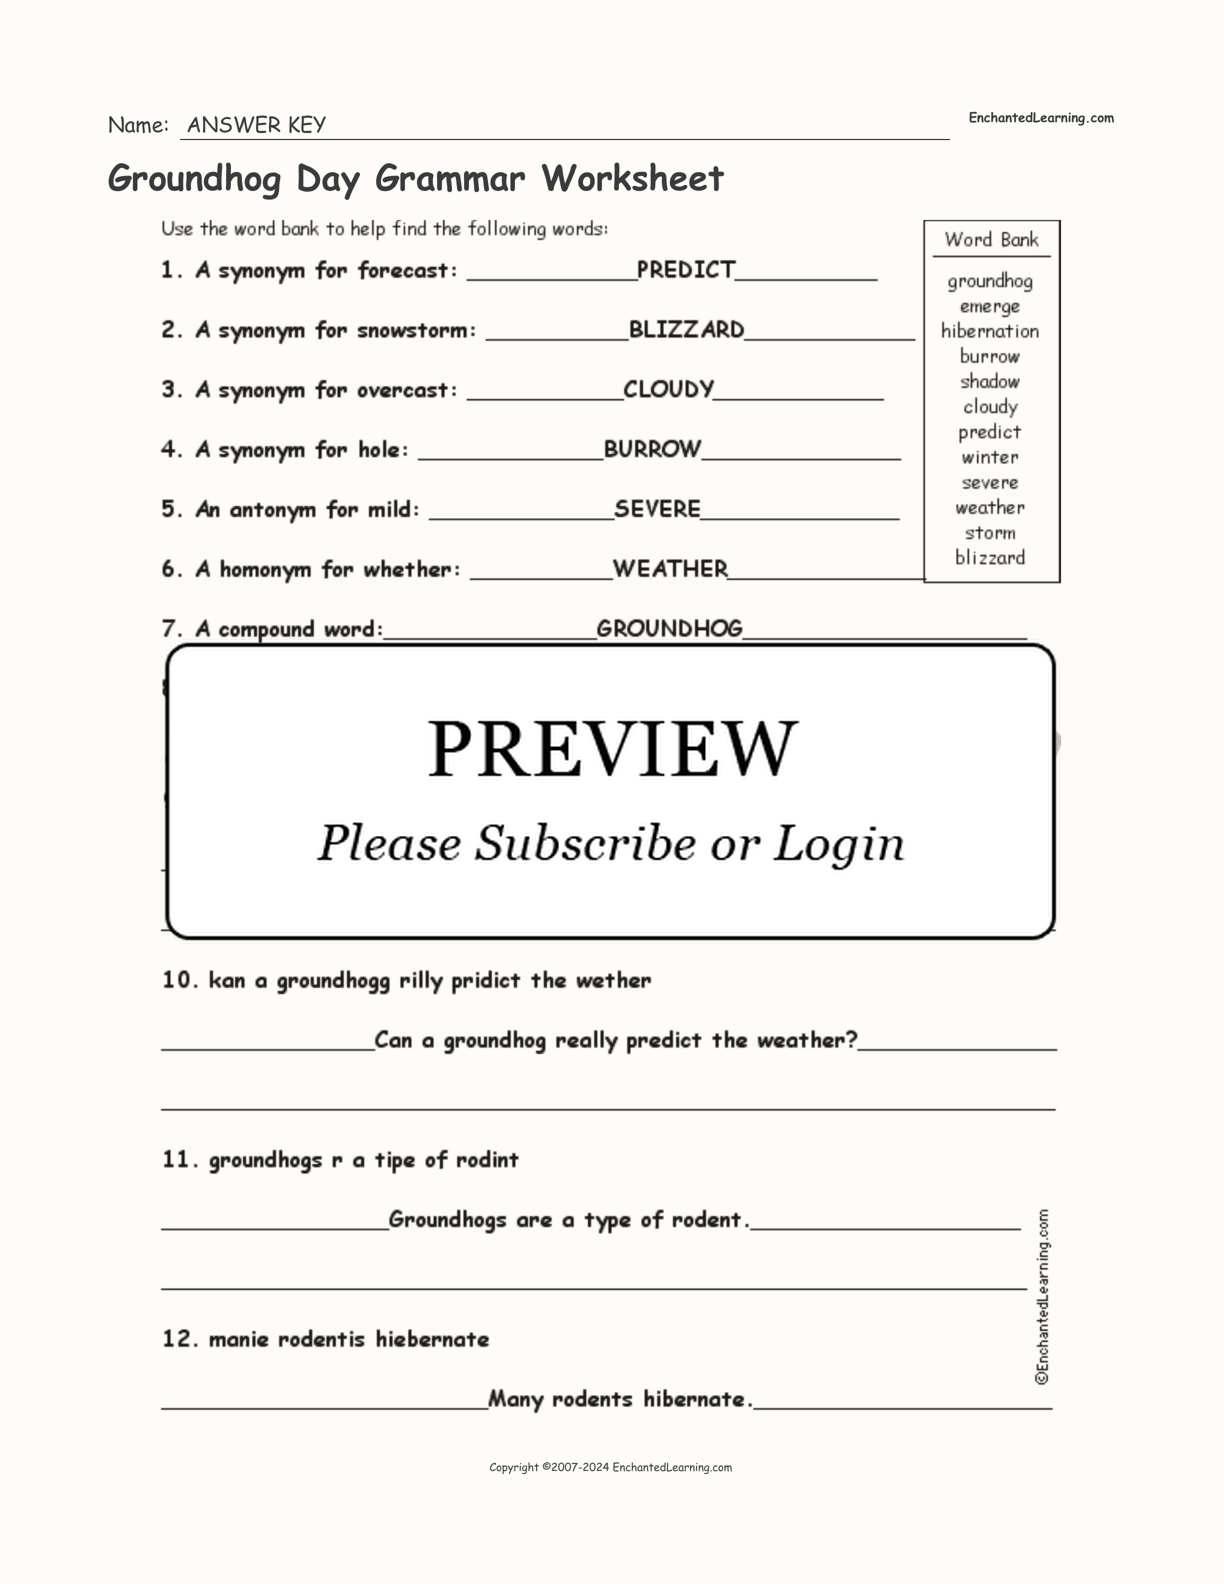 Groundhog Day Grammar Worksheet interactive worksheet page 2